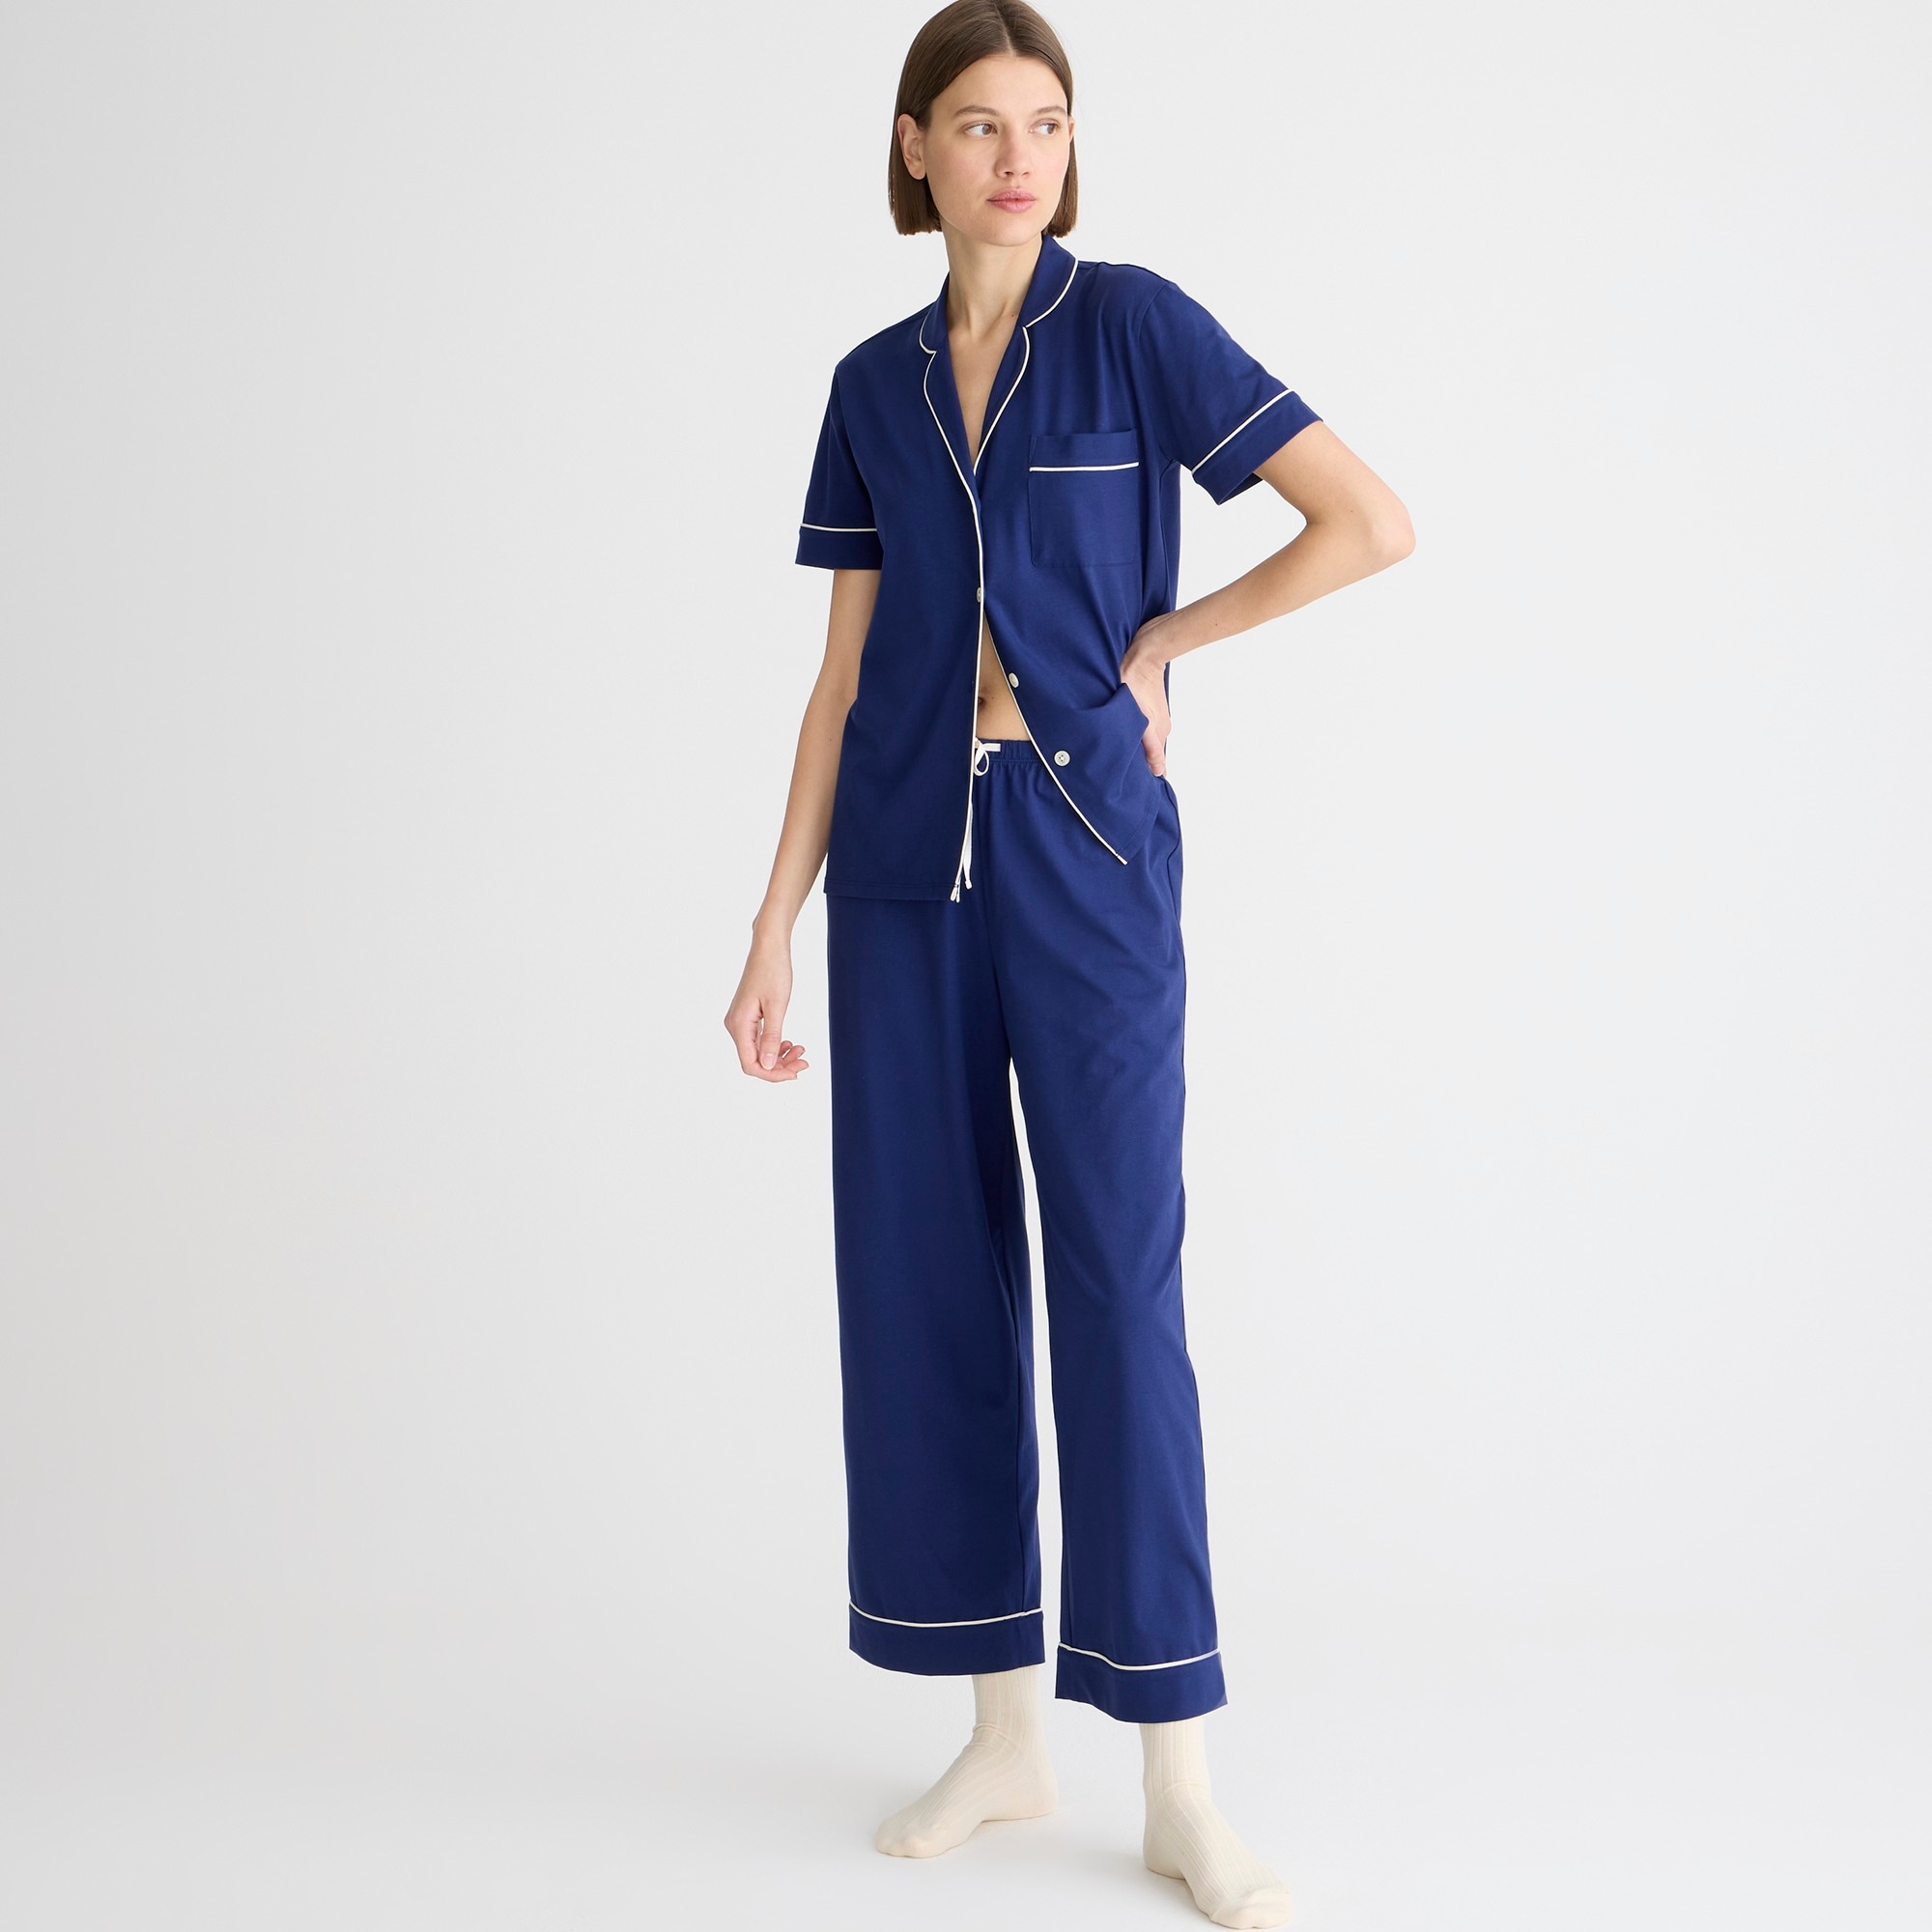 Jcrew Short-sleeve pajama pant set in dreamy cotton-blend